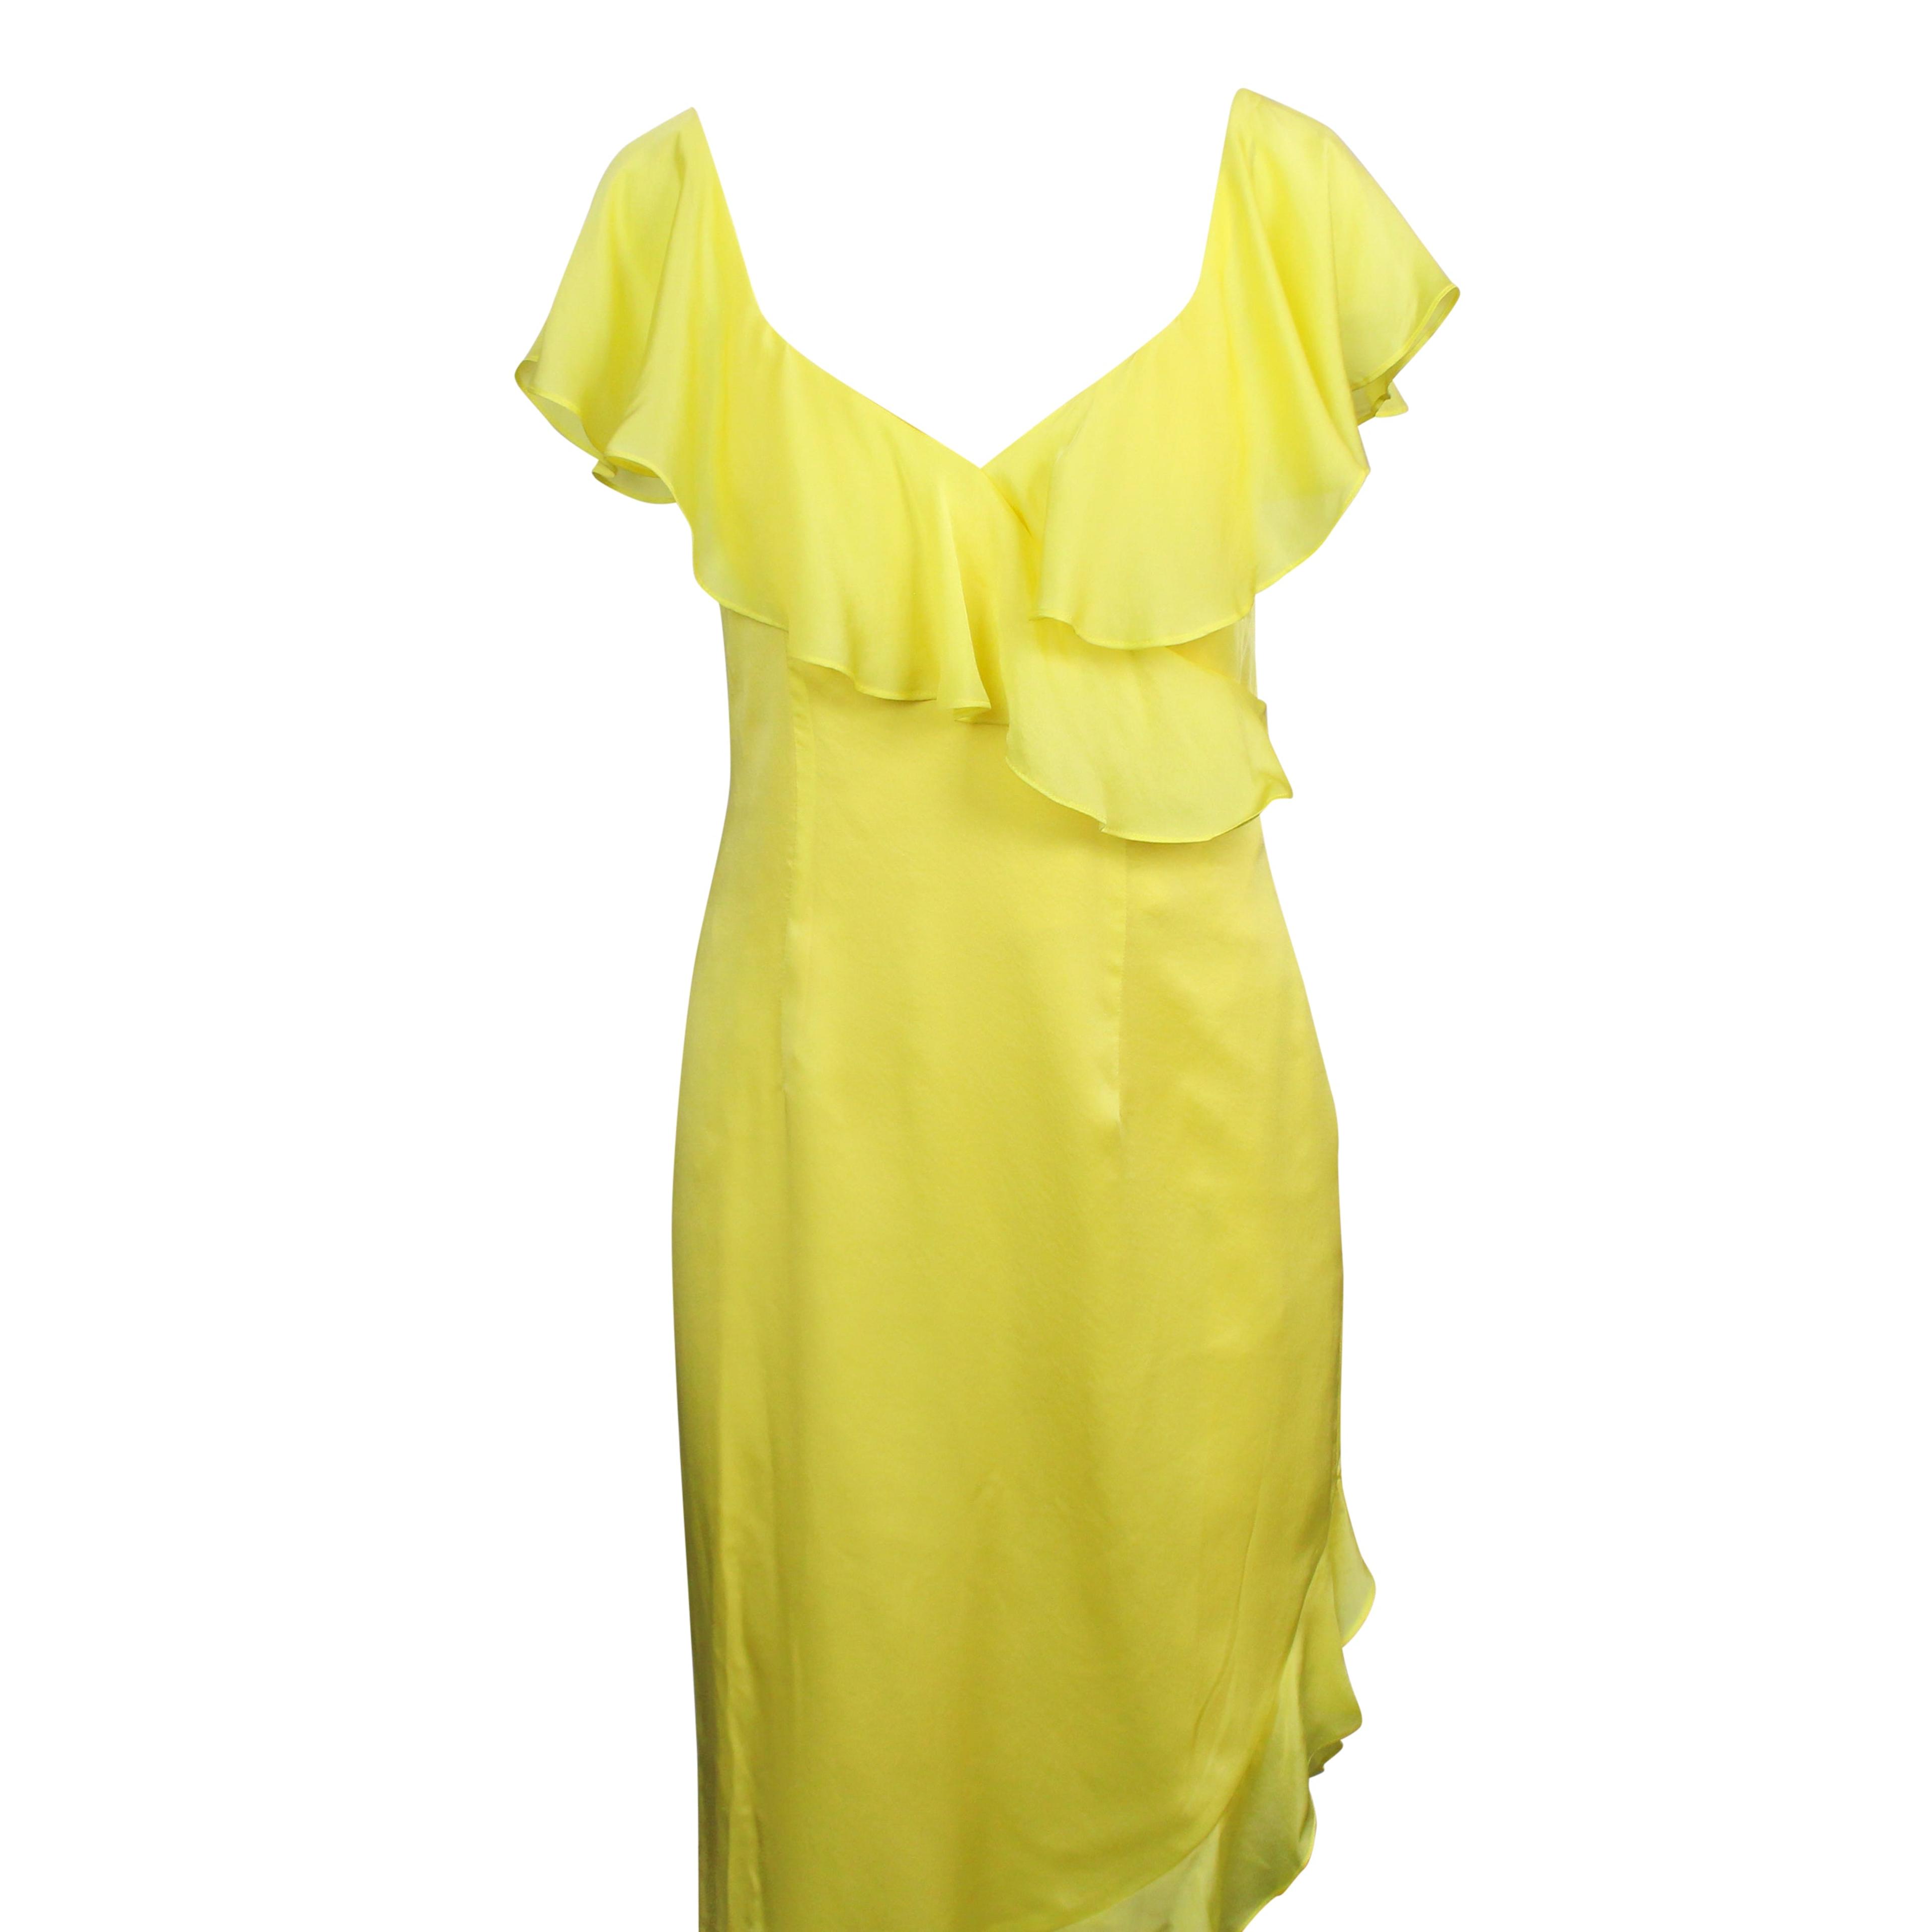 Alternate View 1 of Yellow Silk Cascade Ruffle Sleeveless Dress